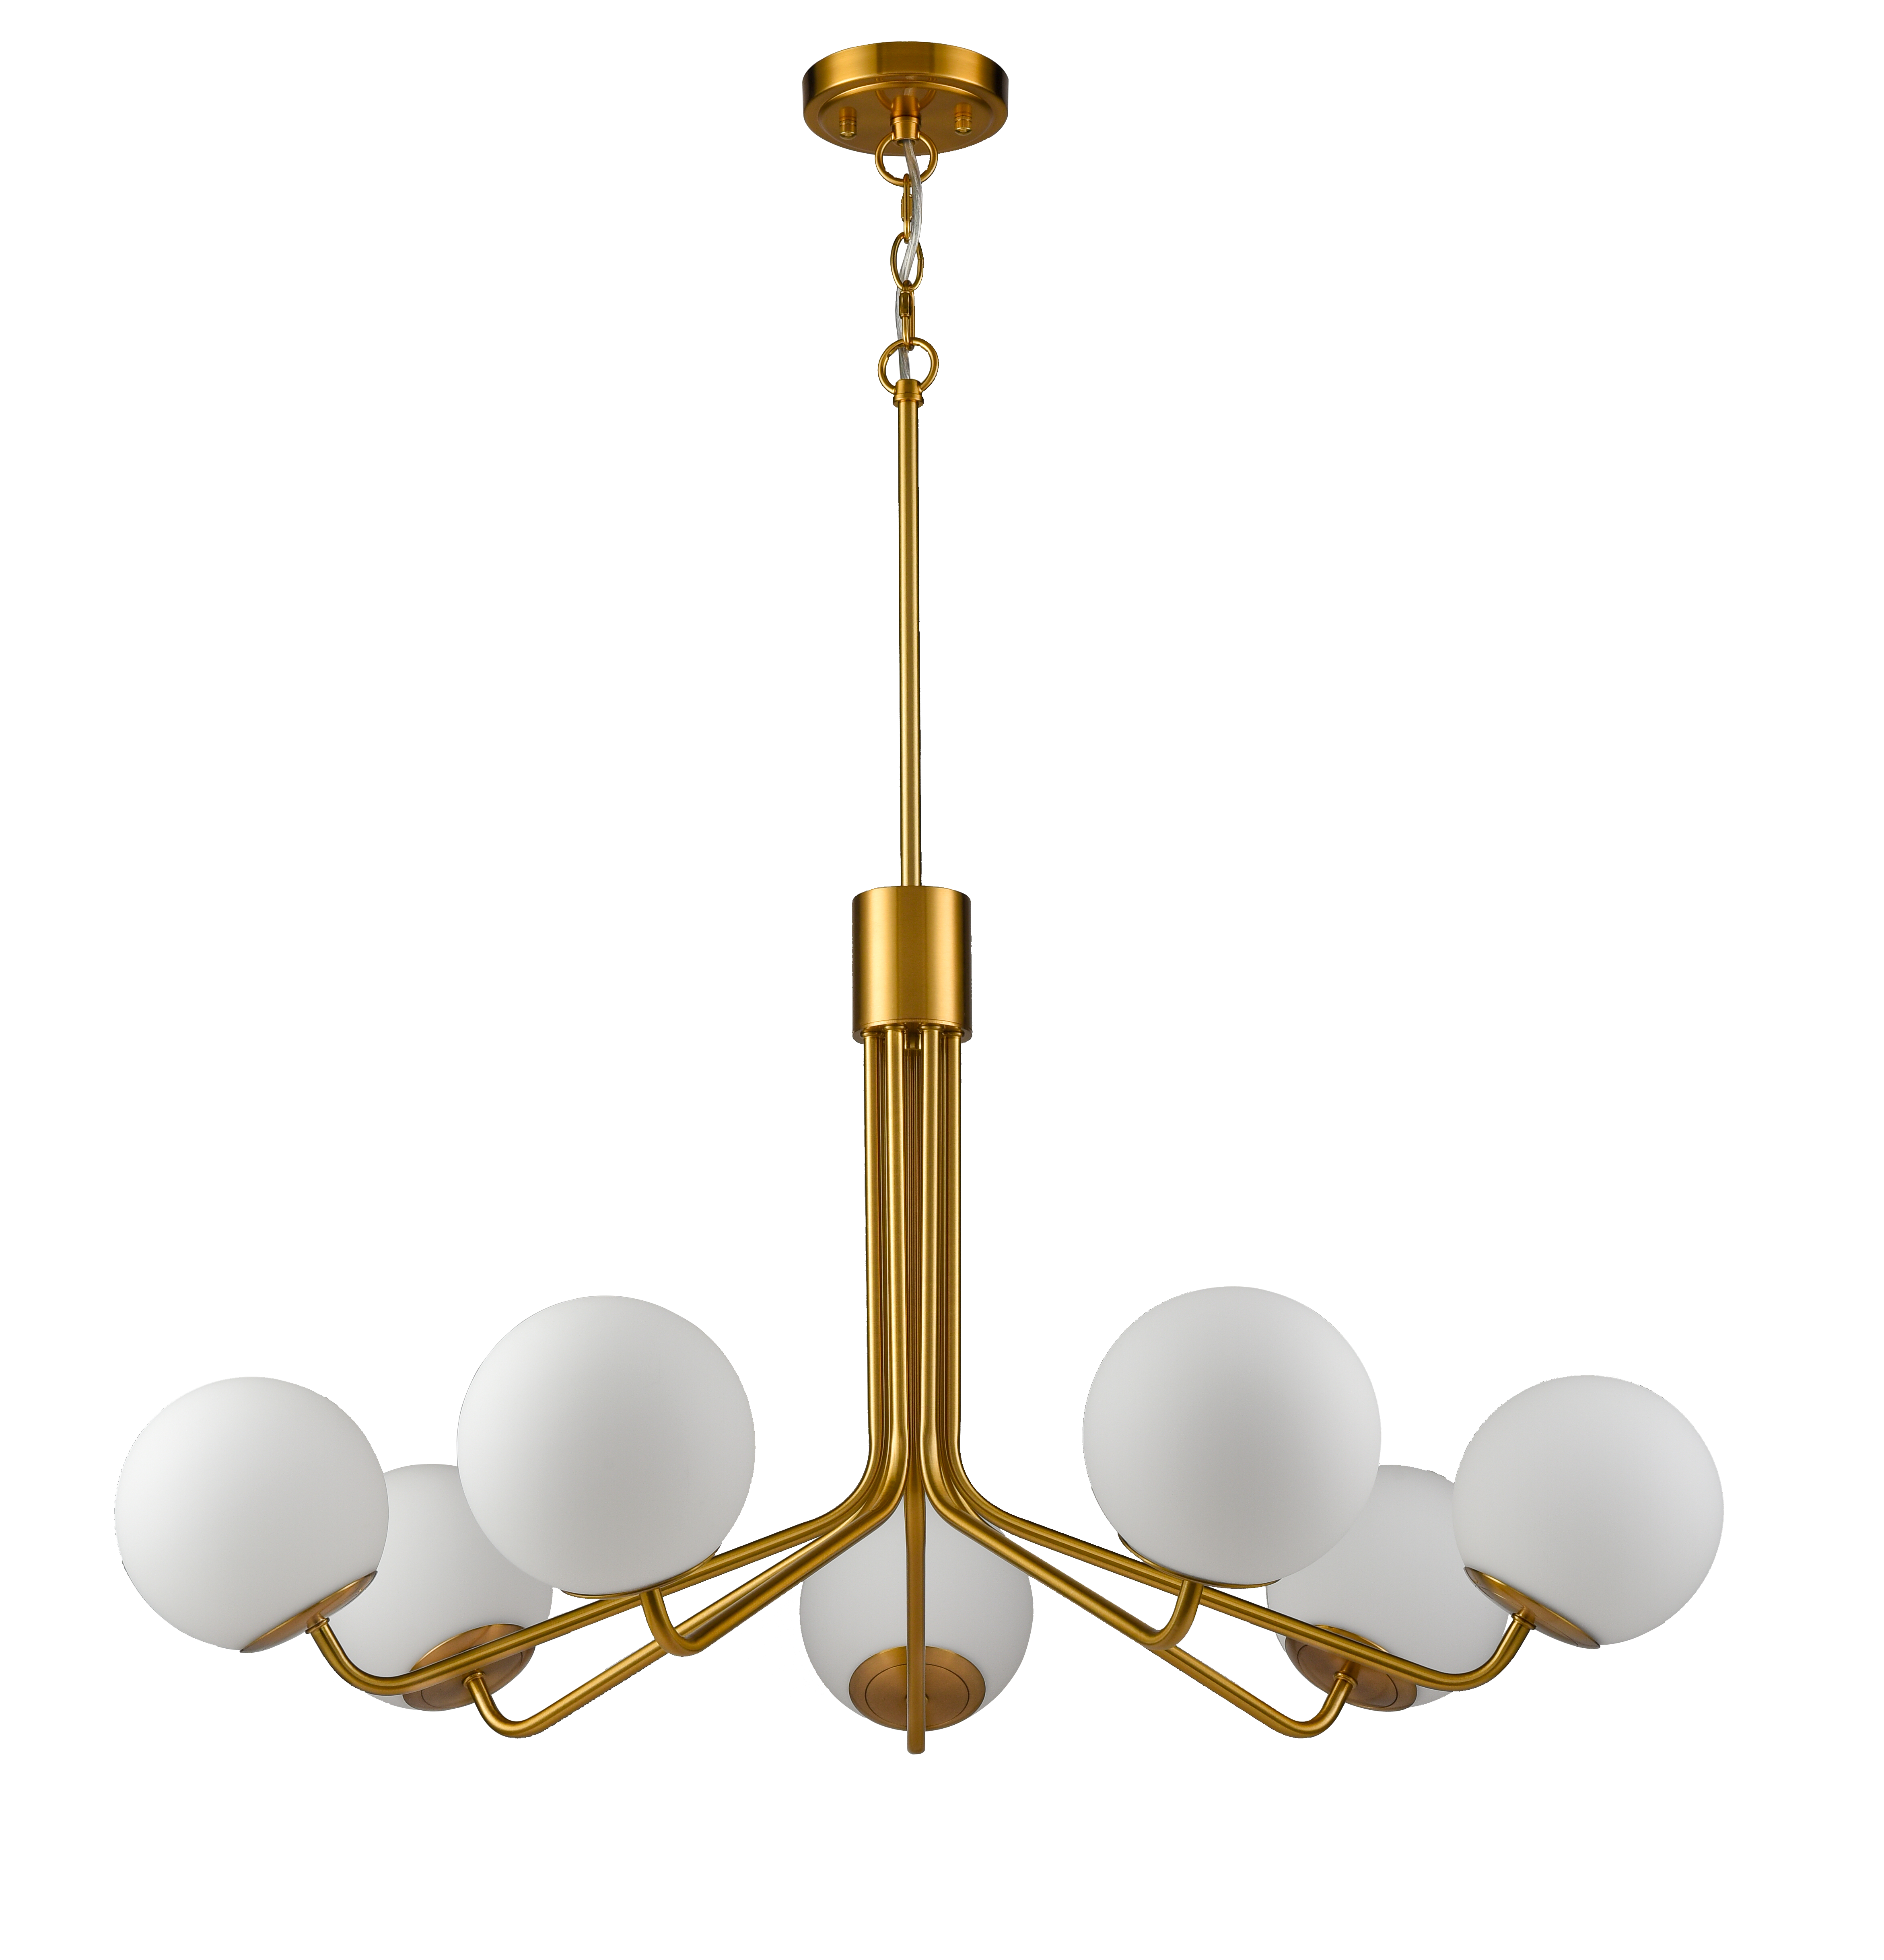 Glass Globe Chandelier Mid Century Pendant Ceiling Light White Ball Lampshade Wrought Iron for Living Dining Room Bedroom 7 Lights